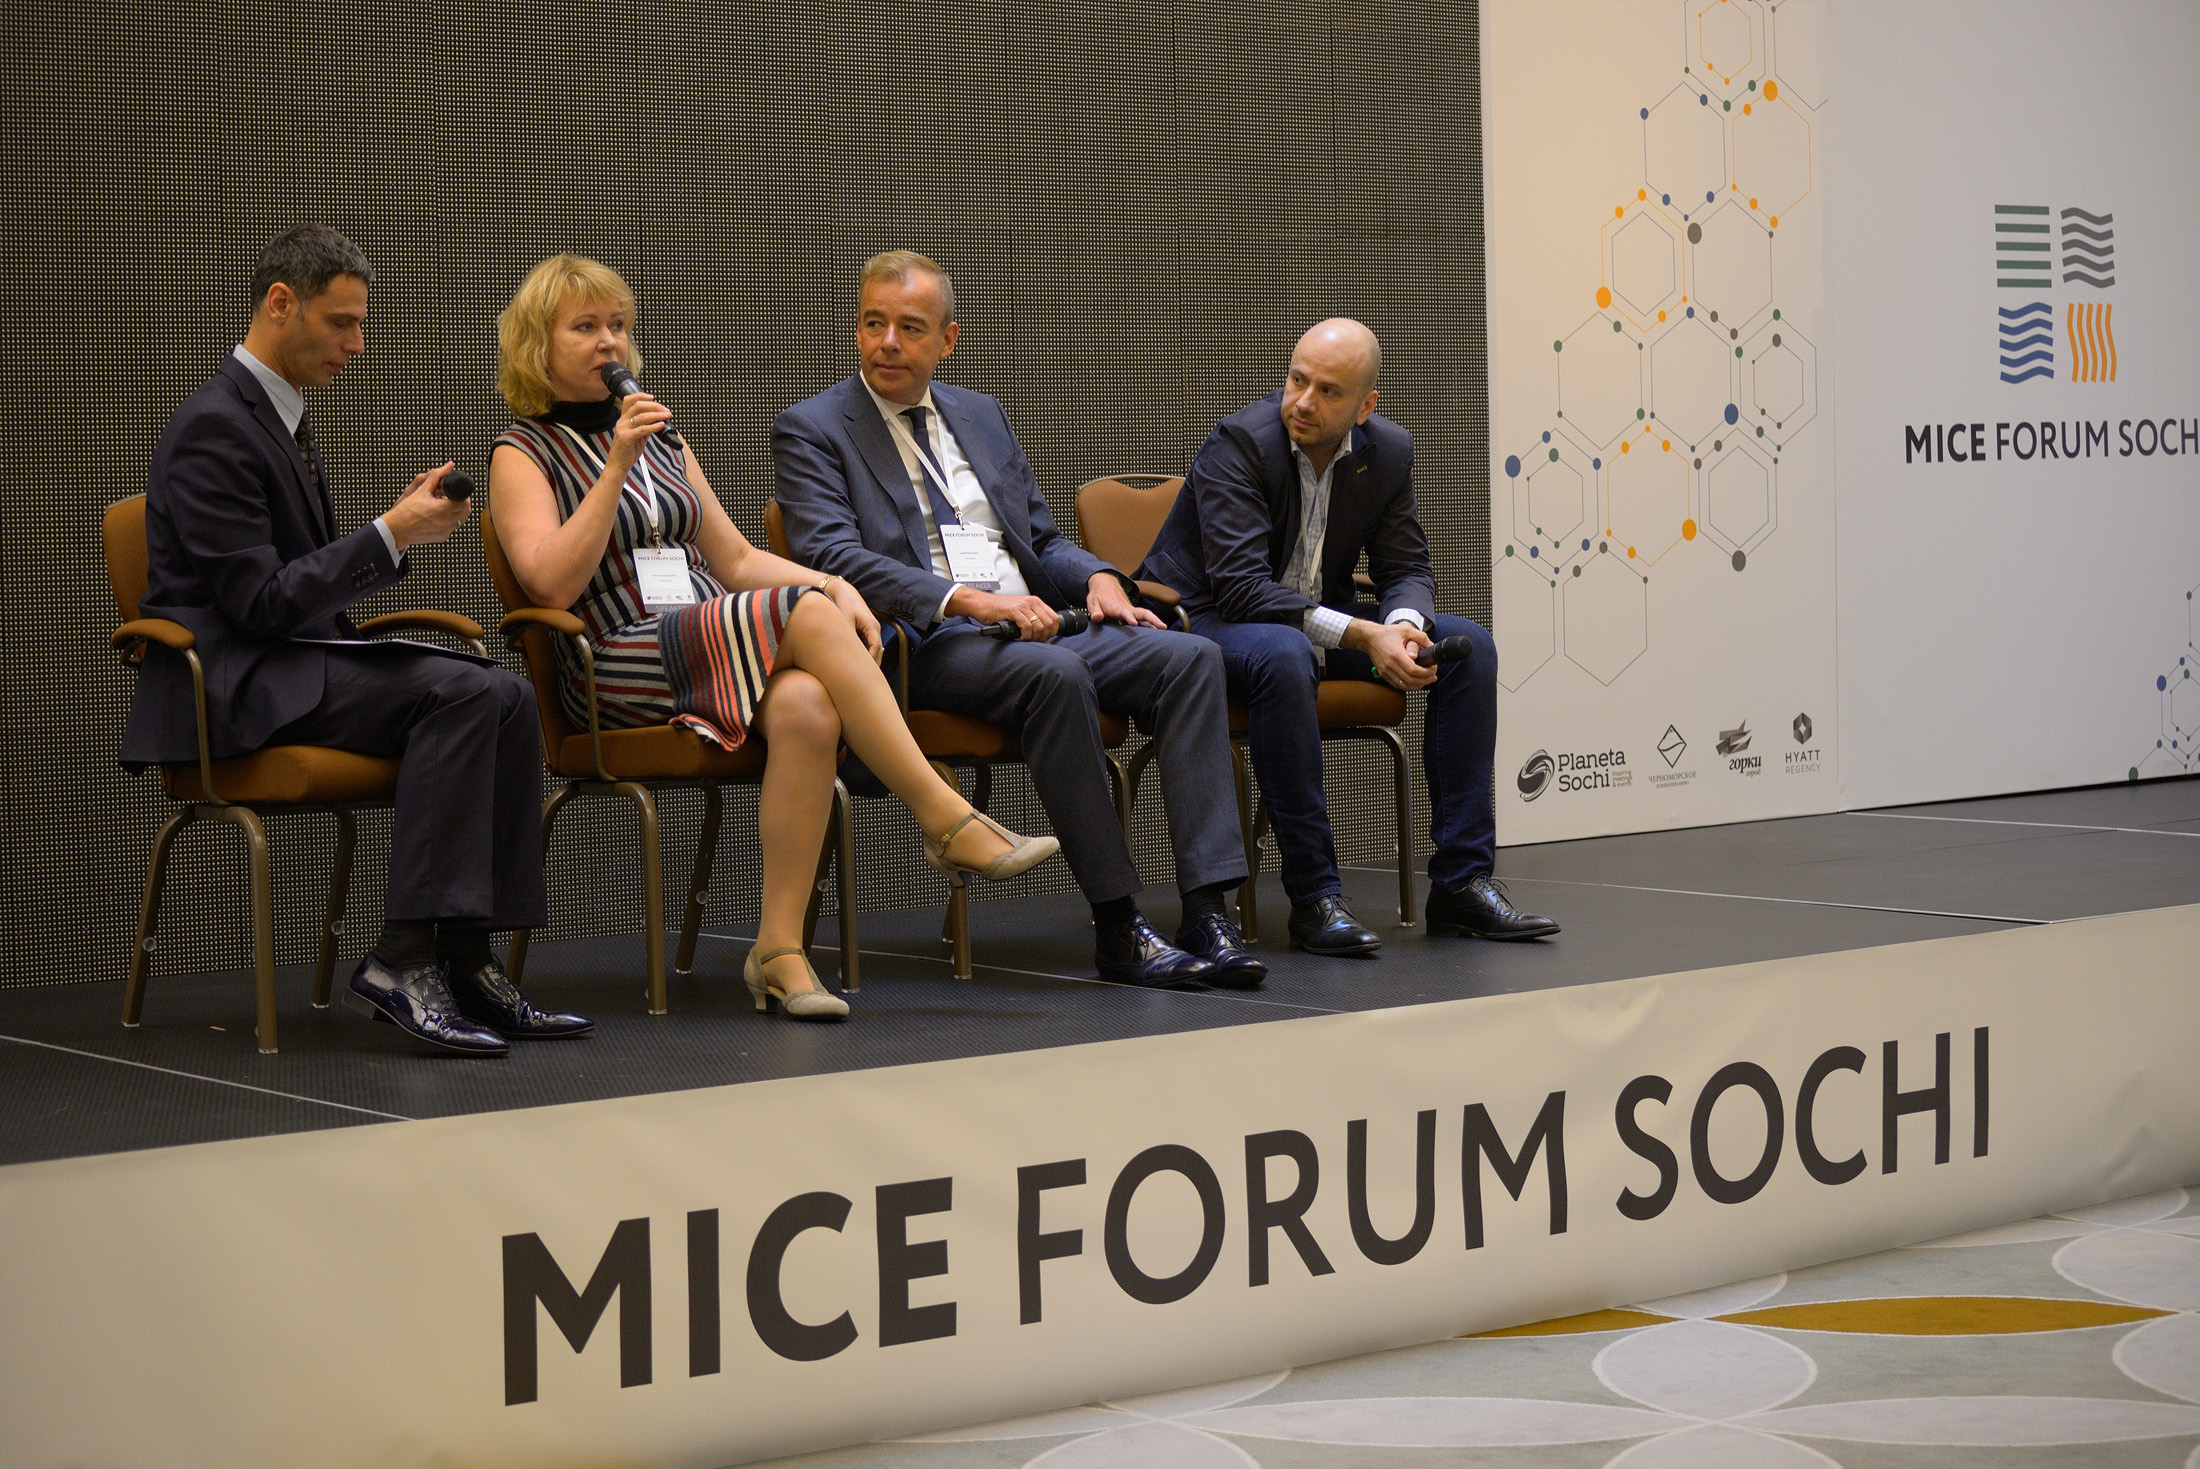 TeamHike принял участие в Mice Forum Sochi 2018